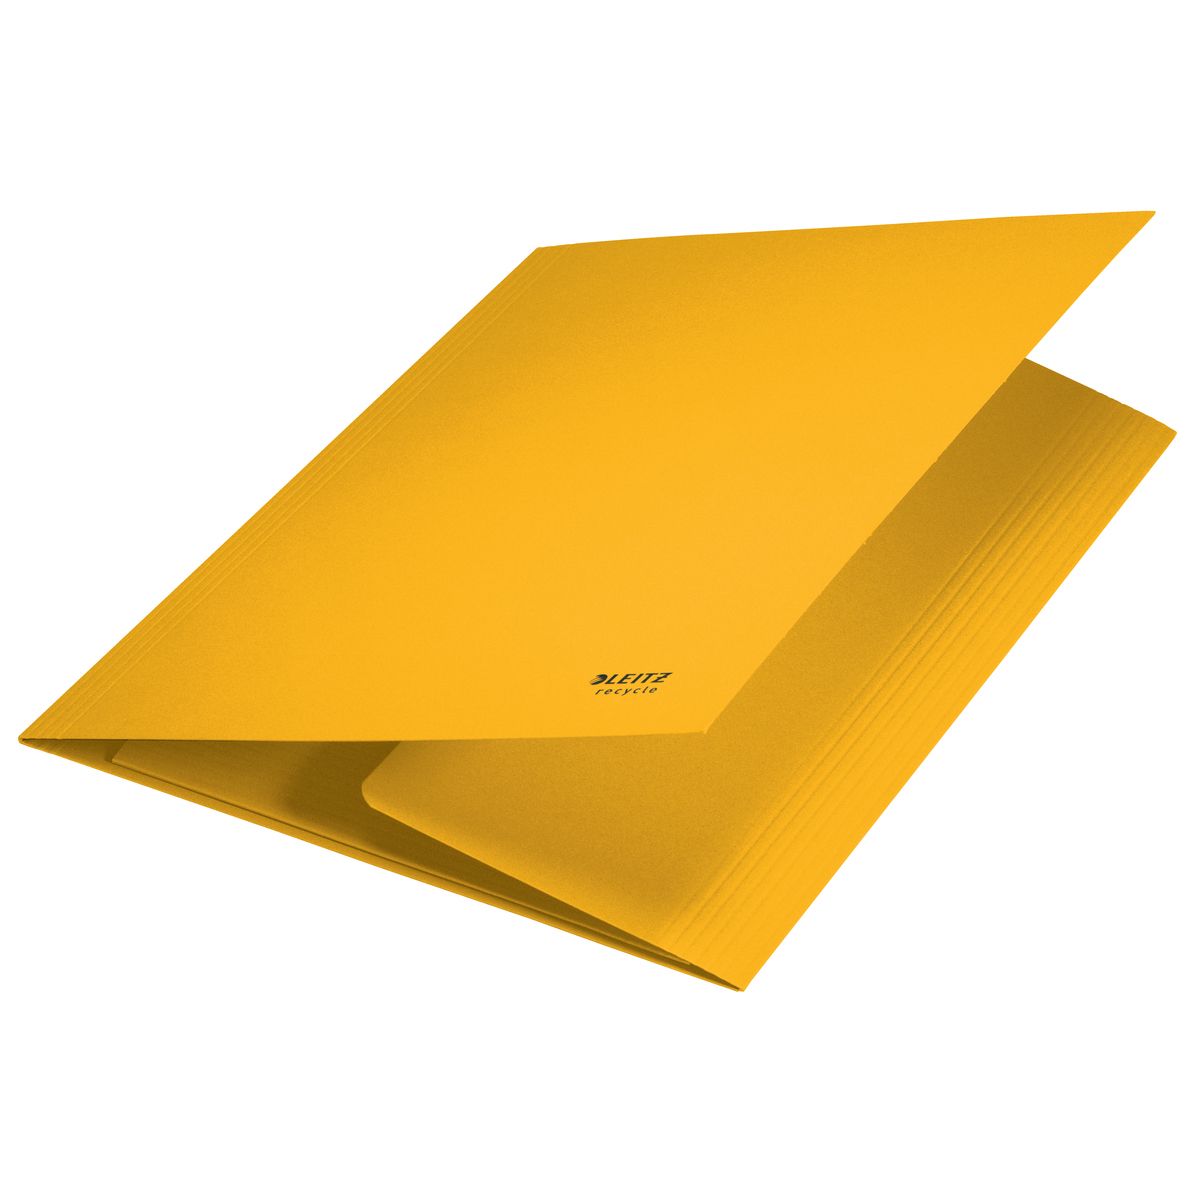 Teczka kartonowa recycle A4 żółta 430g Leitz (39060015)